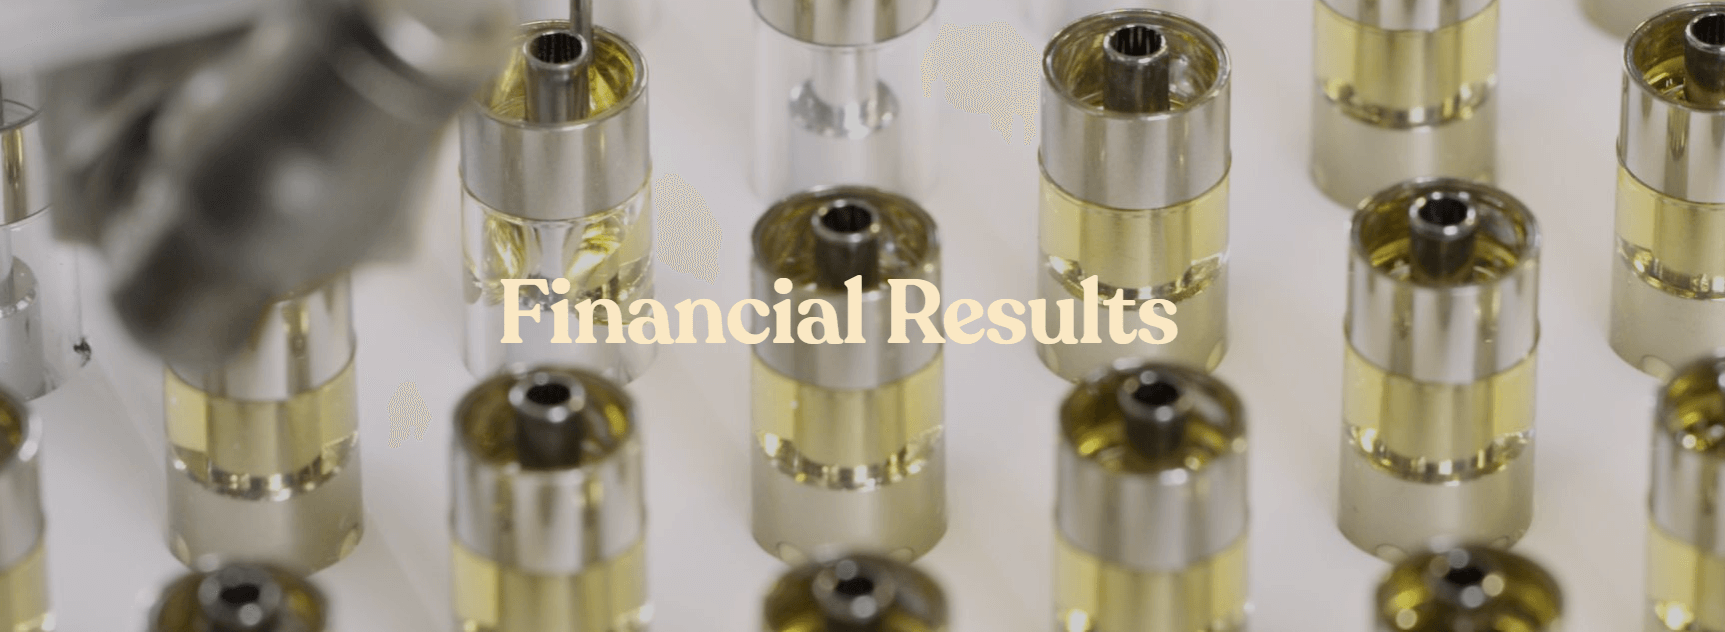 Green Thumb Financial Results